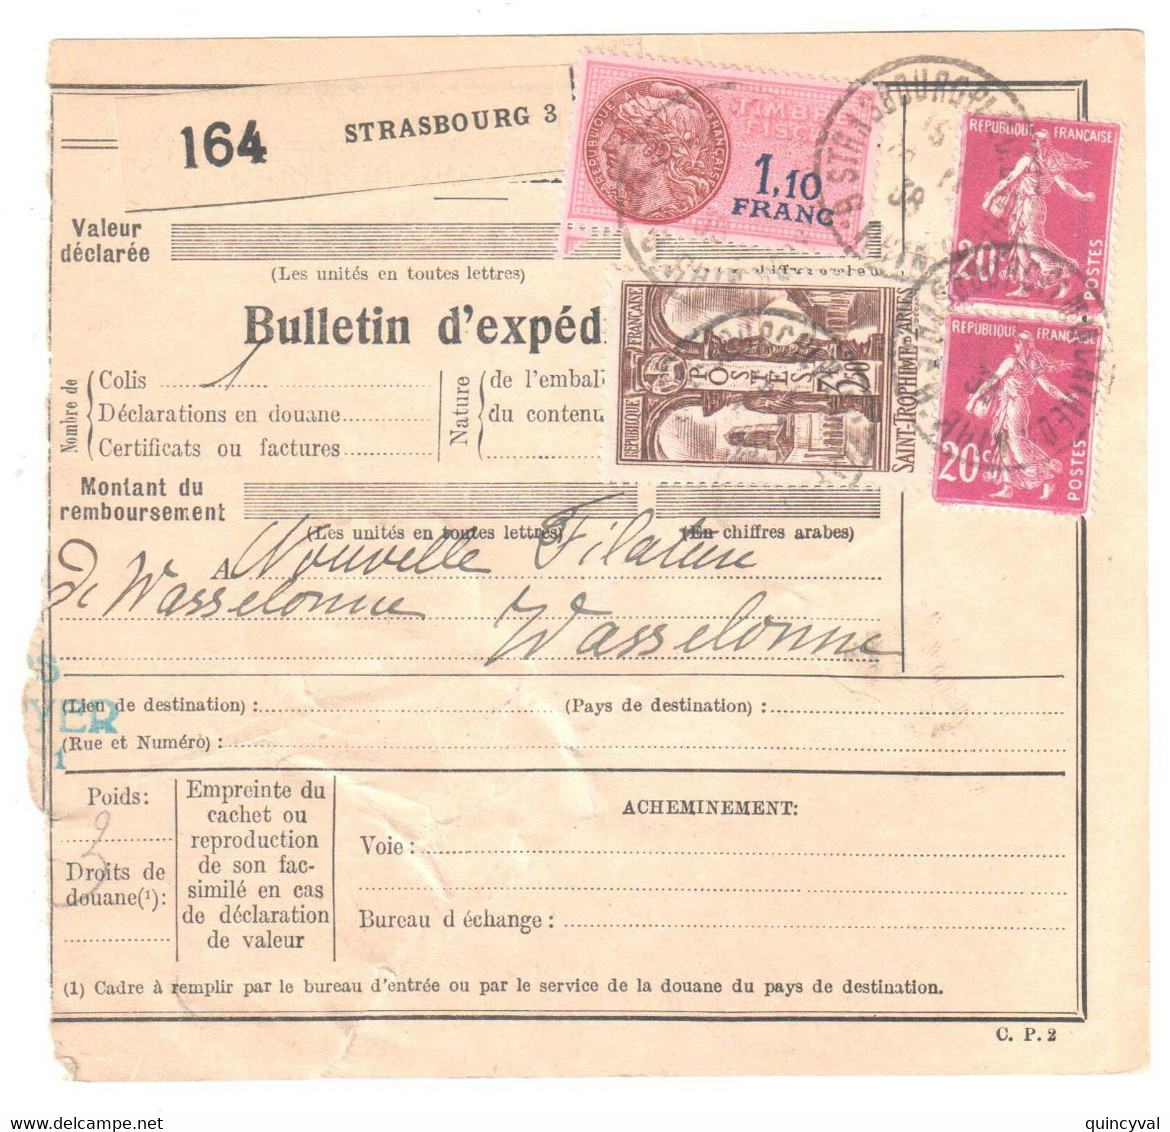 STRASBOURG Bas Rhin Bulletin D'expédition Alsace Lorraine 1938 3,50 F St Trophime 20c Semeuse Yv 302 139 - Storia Postale